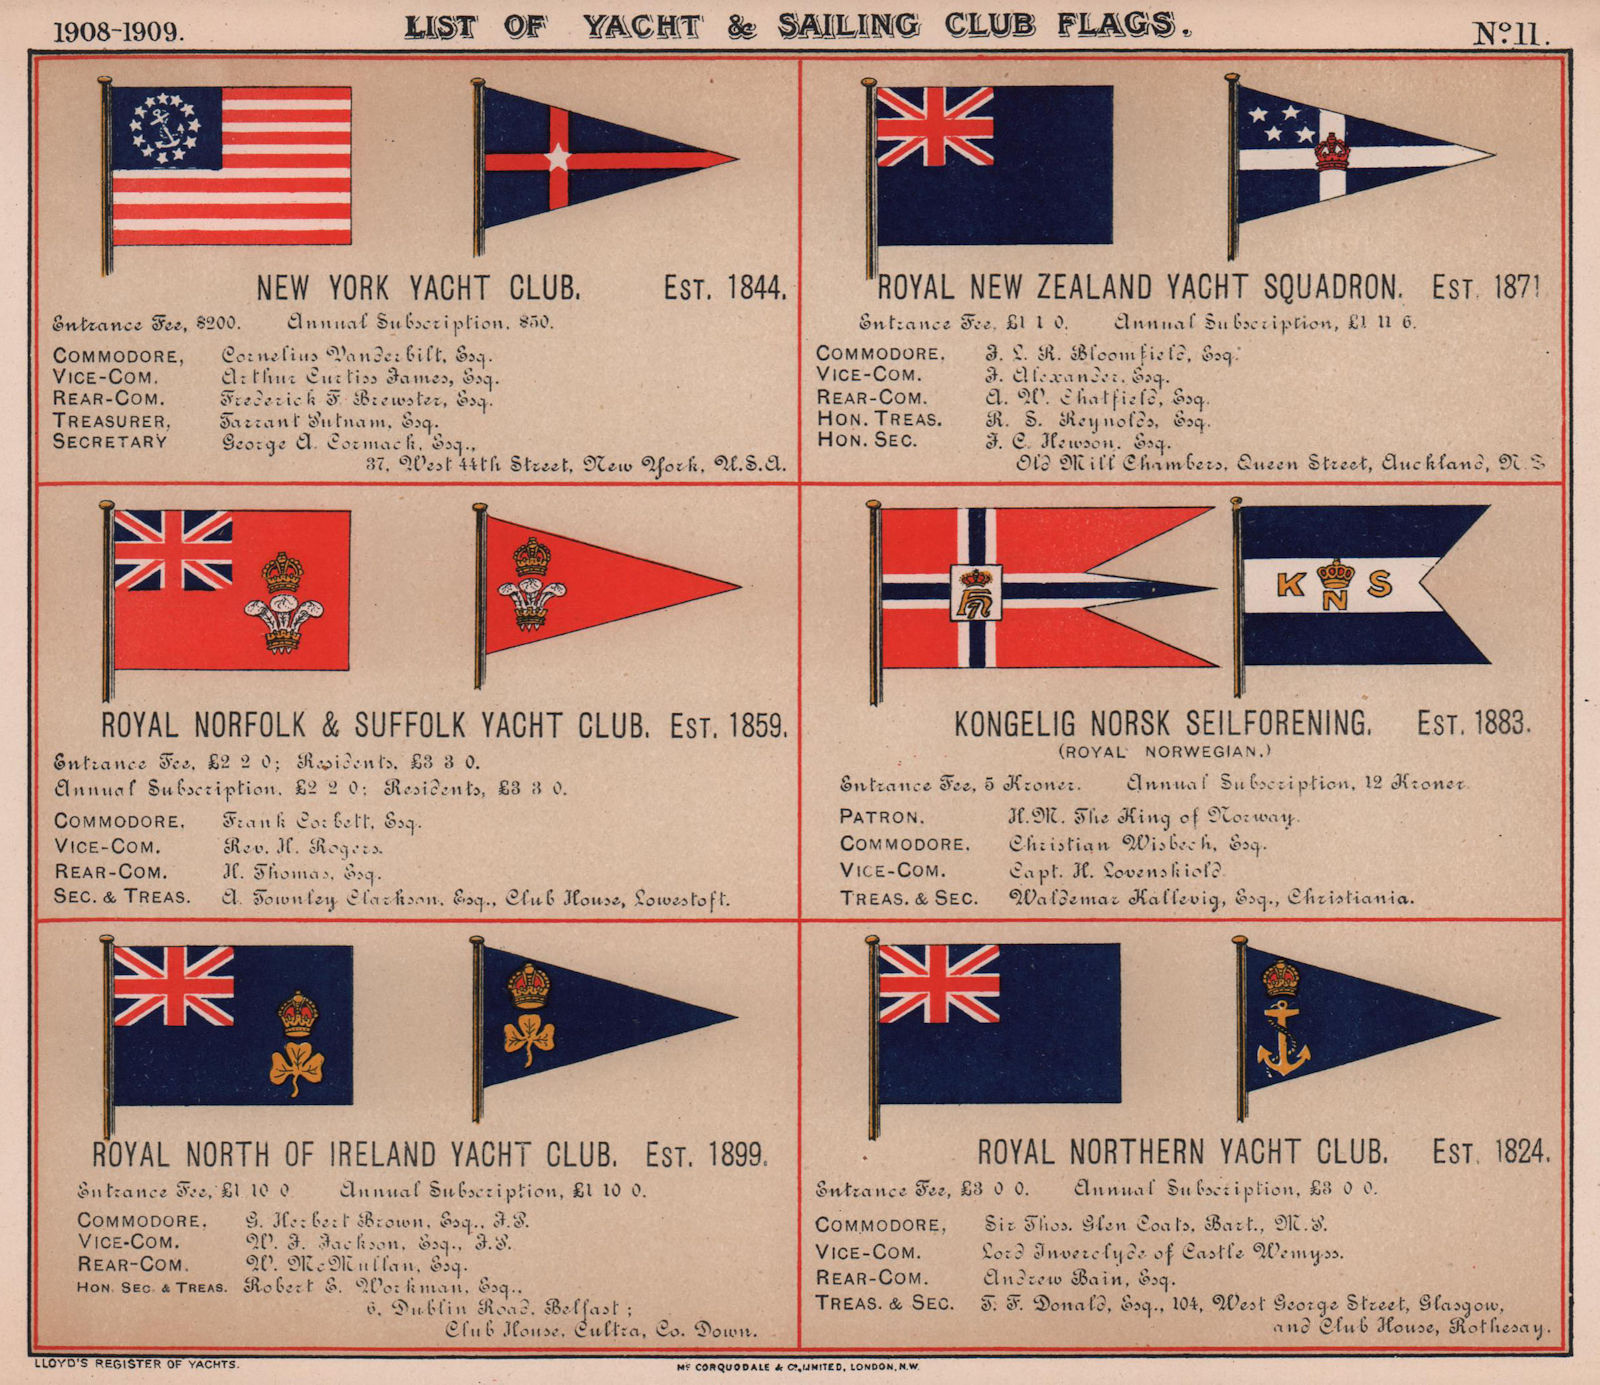 ROYAL YACHT & SAILING CLUB FLAGS N New York/Zealand Norfolk Suffolk Norsk 1908